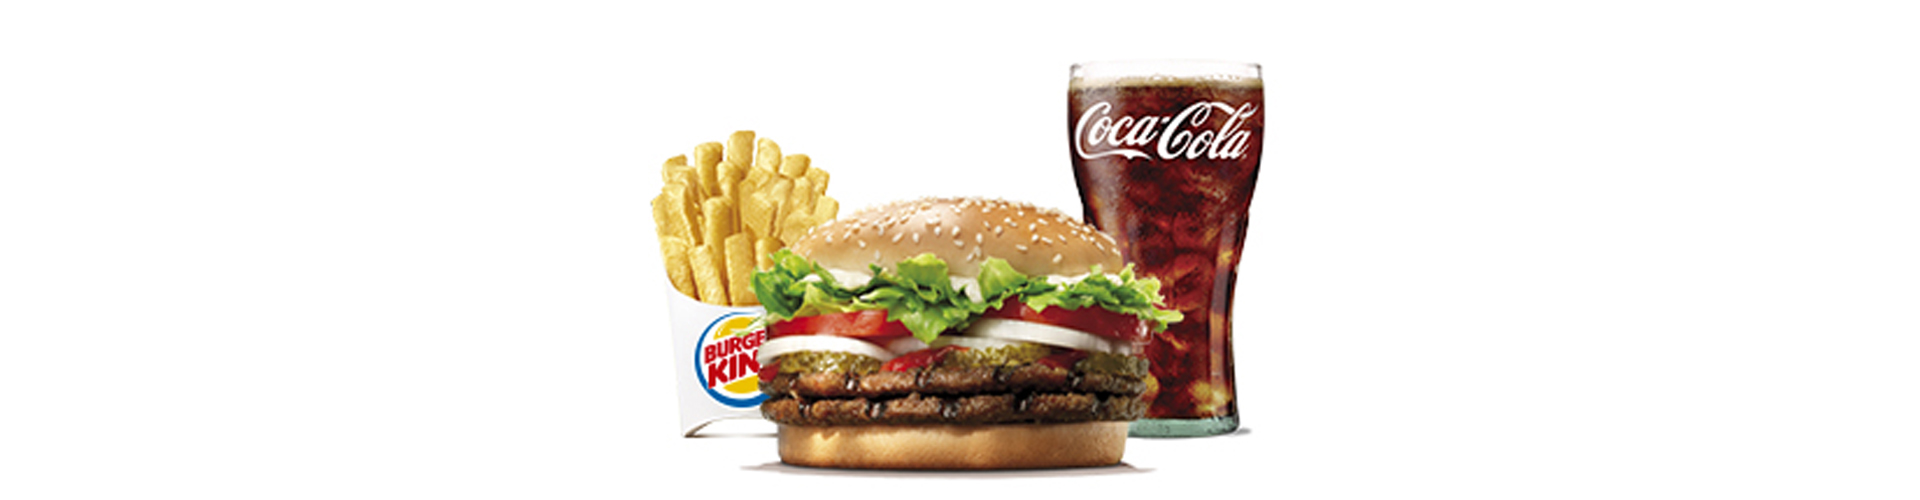 burgerking-40001708-limonada-ensalada-sandy_vainilla